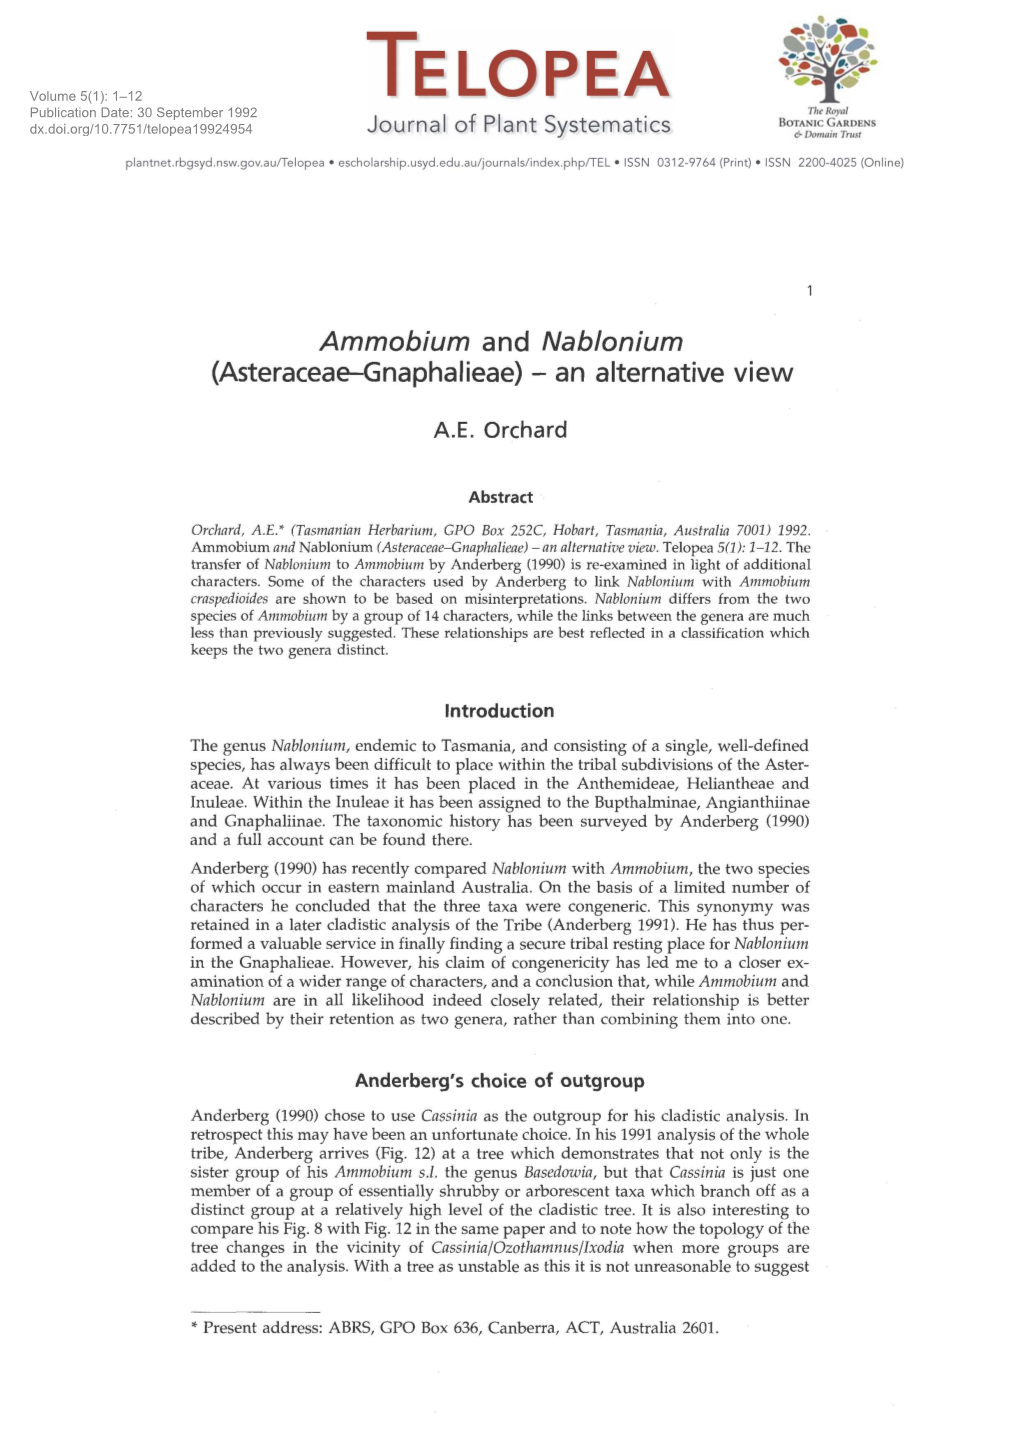 Ammobium and Nab/Onium (Asteraceae-Gnaphalieae) - an Alternative View